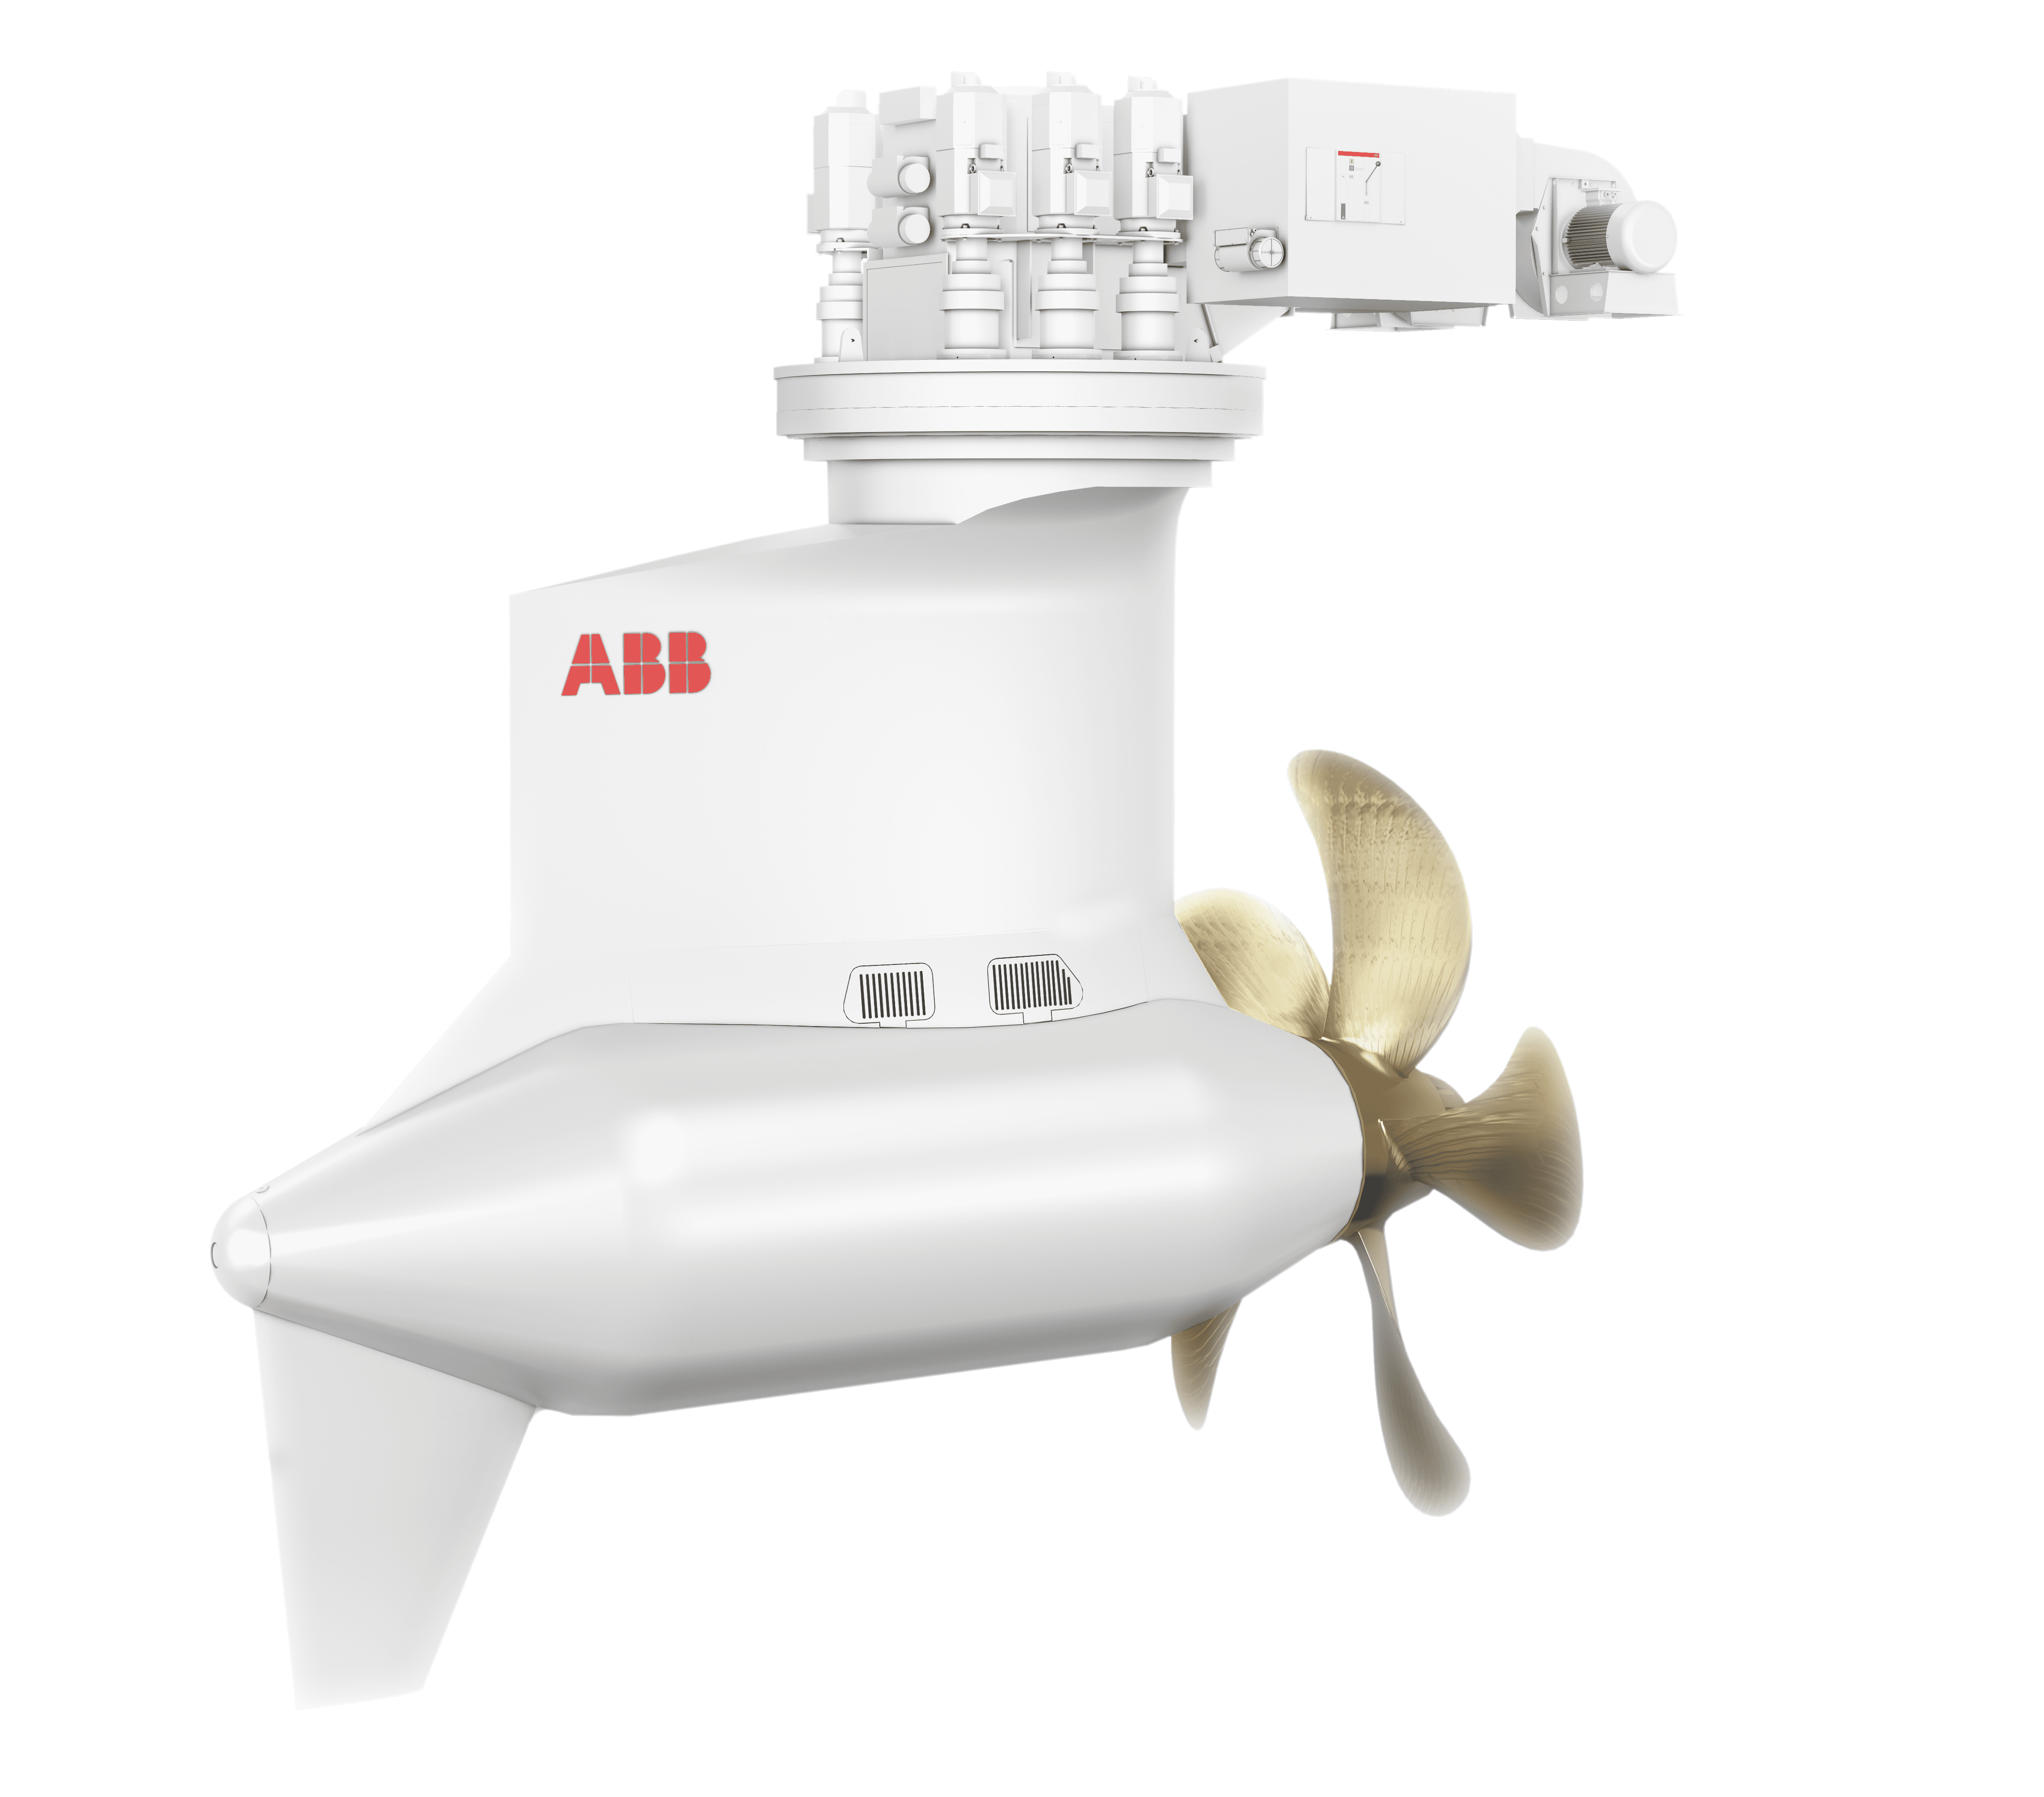 ABB’s Mid-range Azipod® Propulsion To Power Four Cruise Vessels Built By Fincantieri